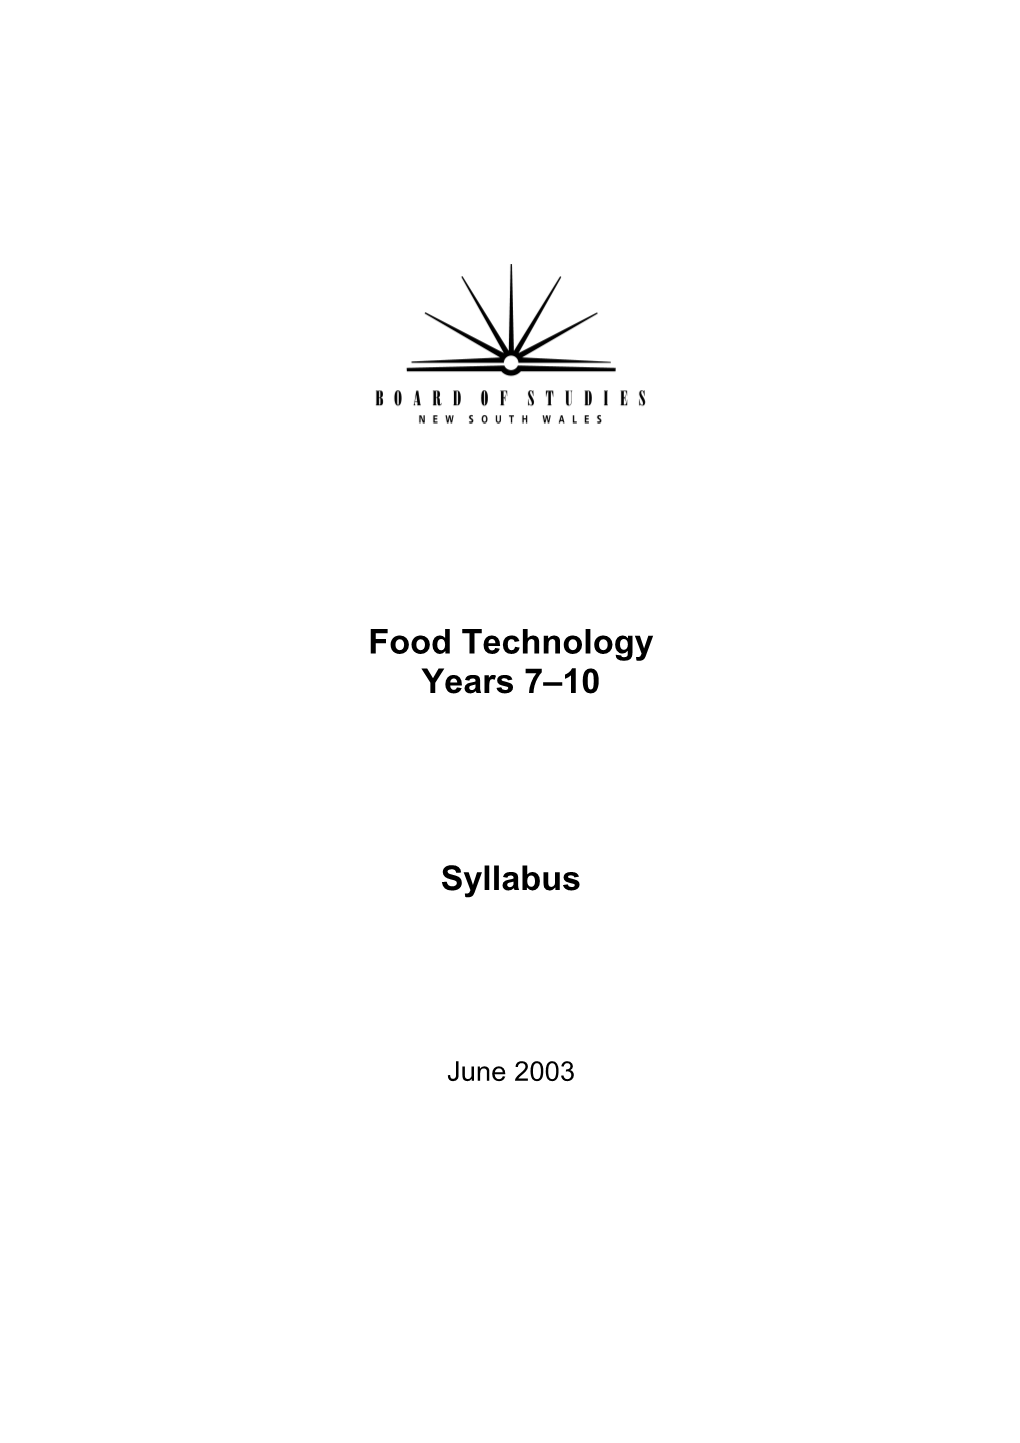 Years 7-10 Syllabus - Food Technology